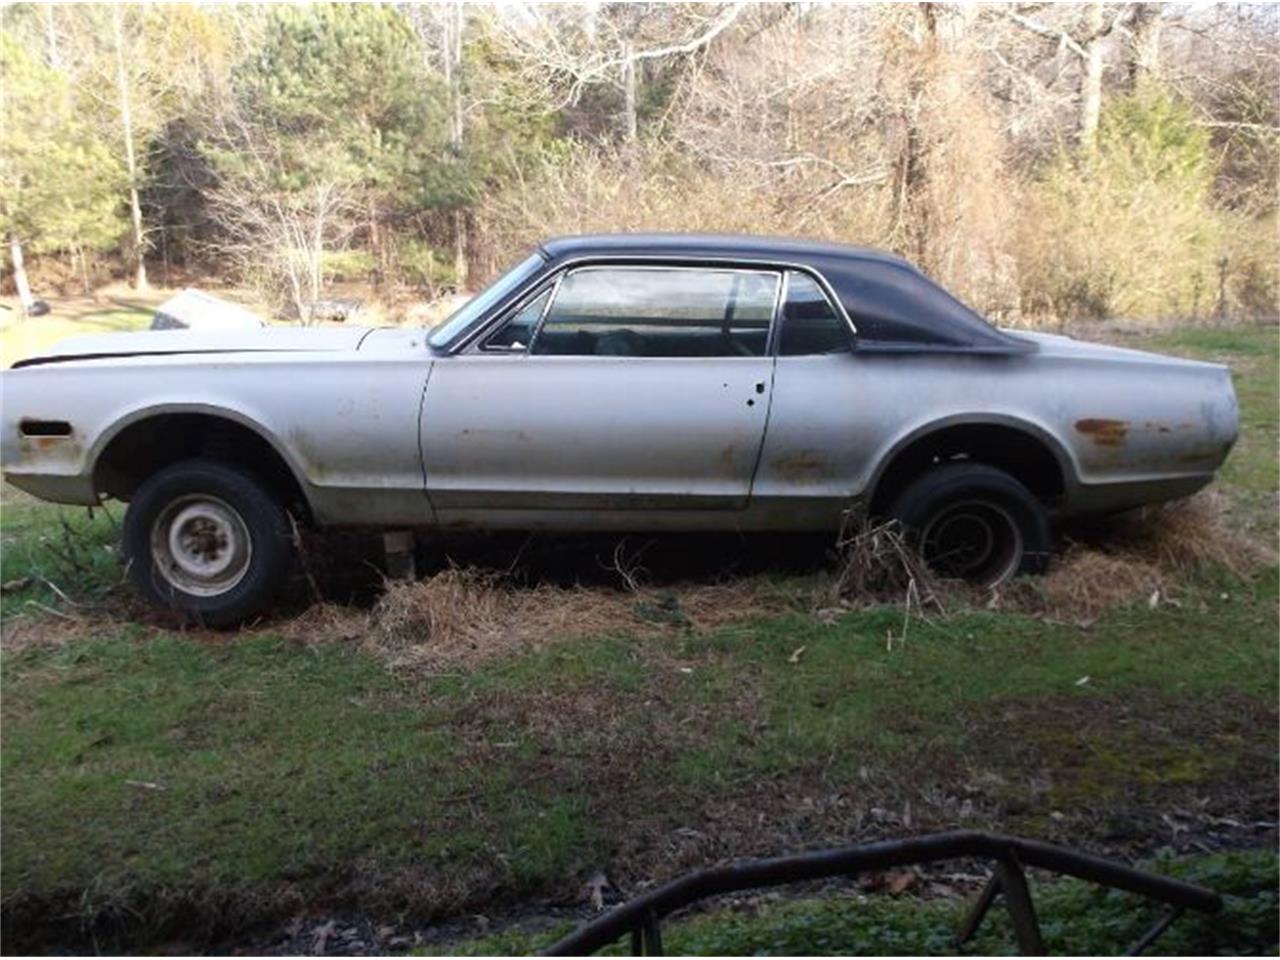 For Sale: 1968 Mercury Cougar in Cadillac, Michigan for sale in Cadillac, MI